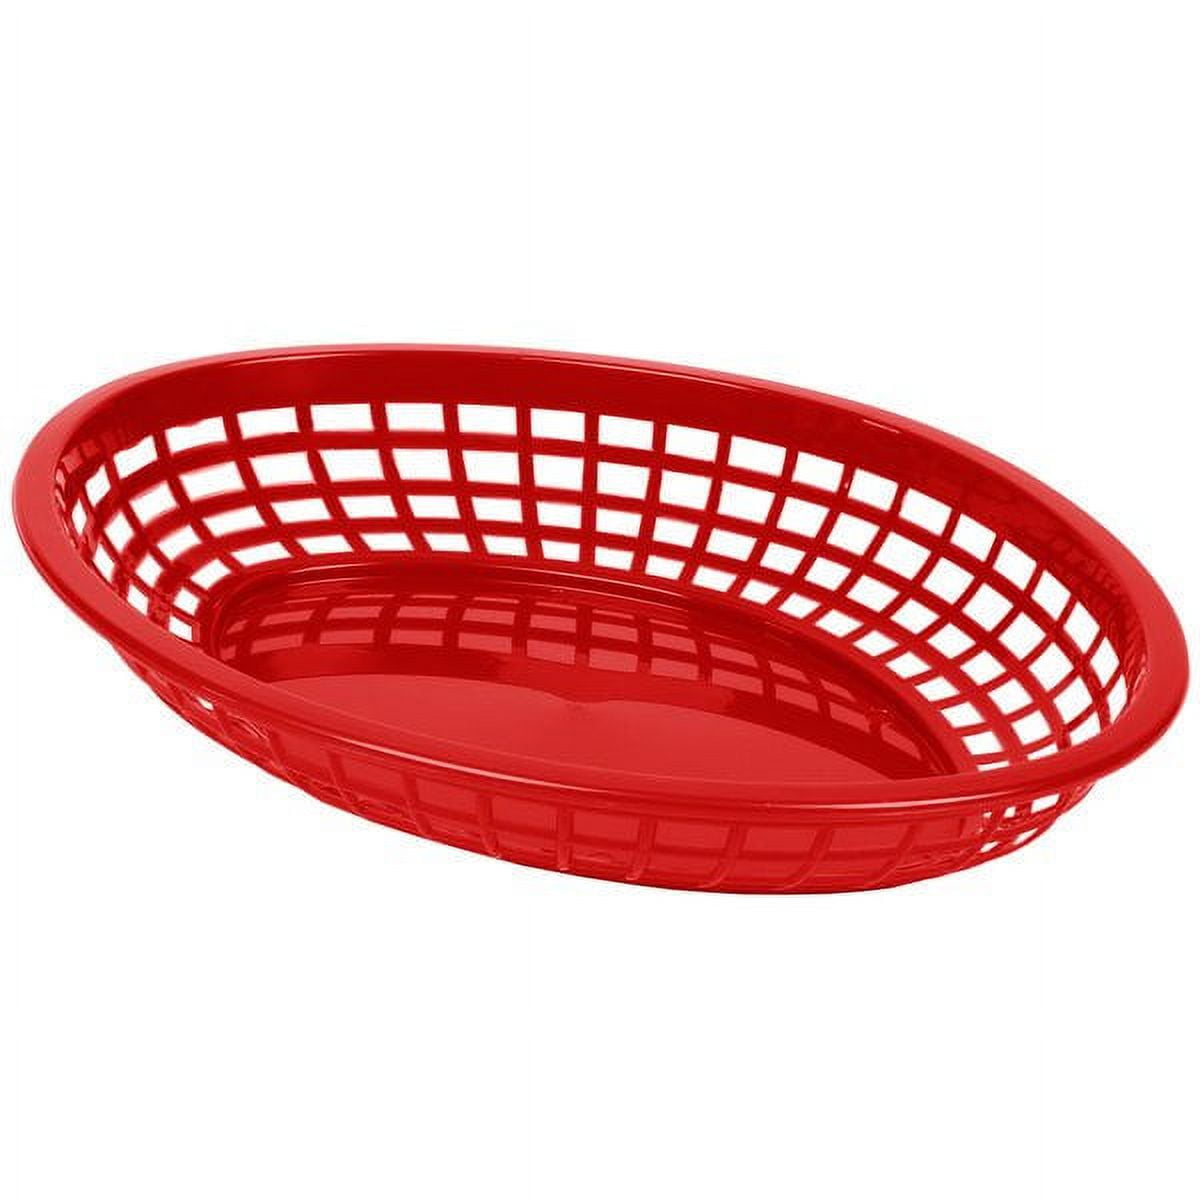 Tablecraft HM1175R 8-1/4X3-1/4 Hand Woven Ridal Red Round Basket